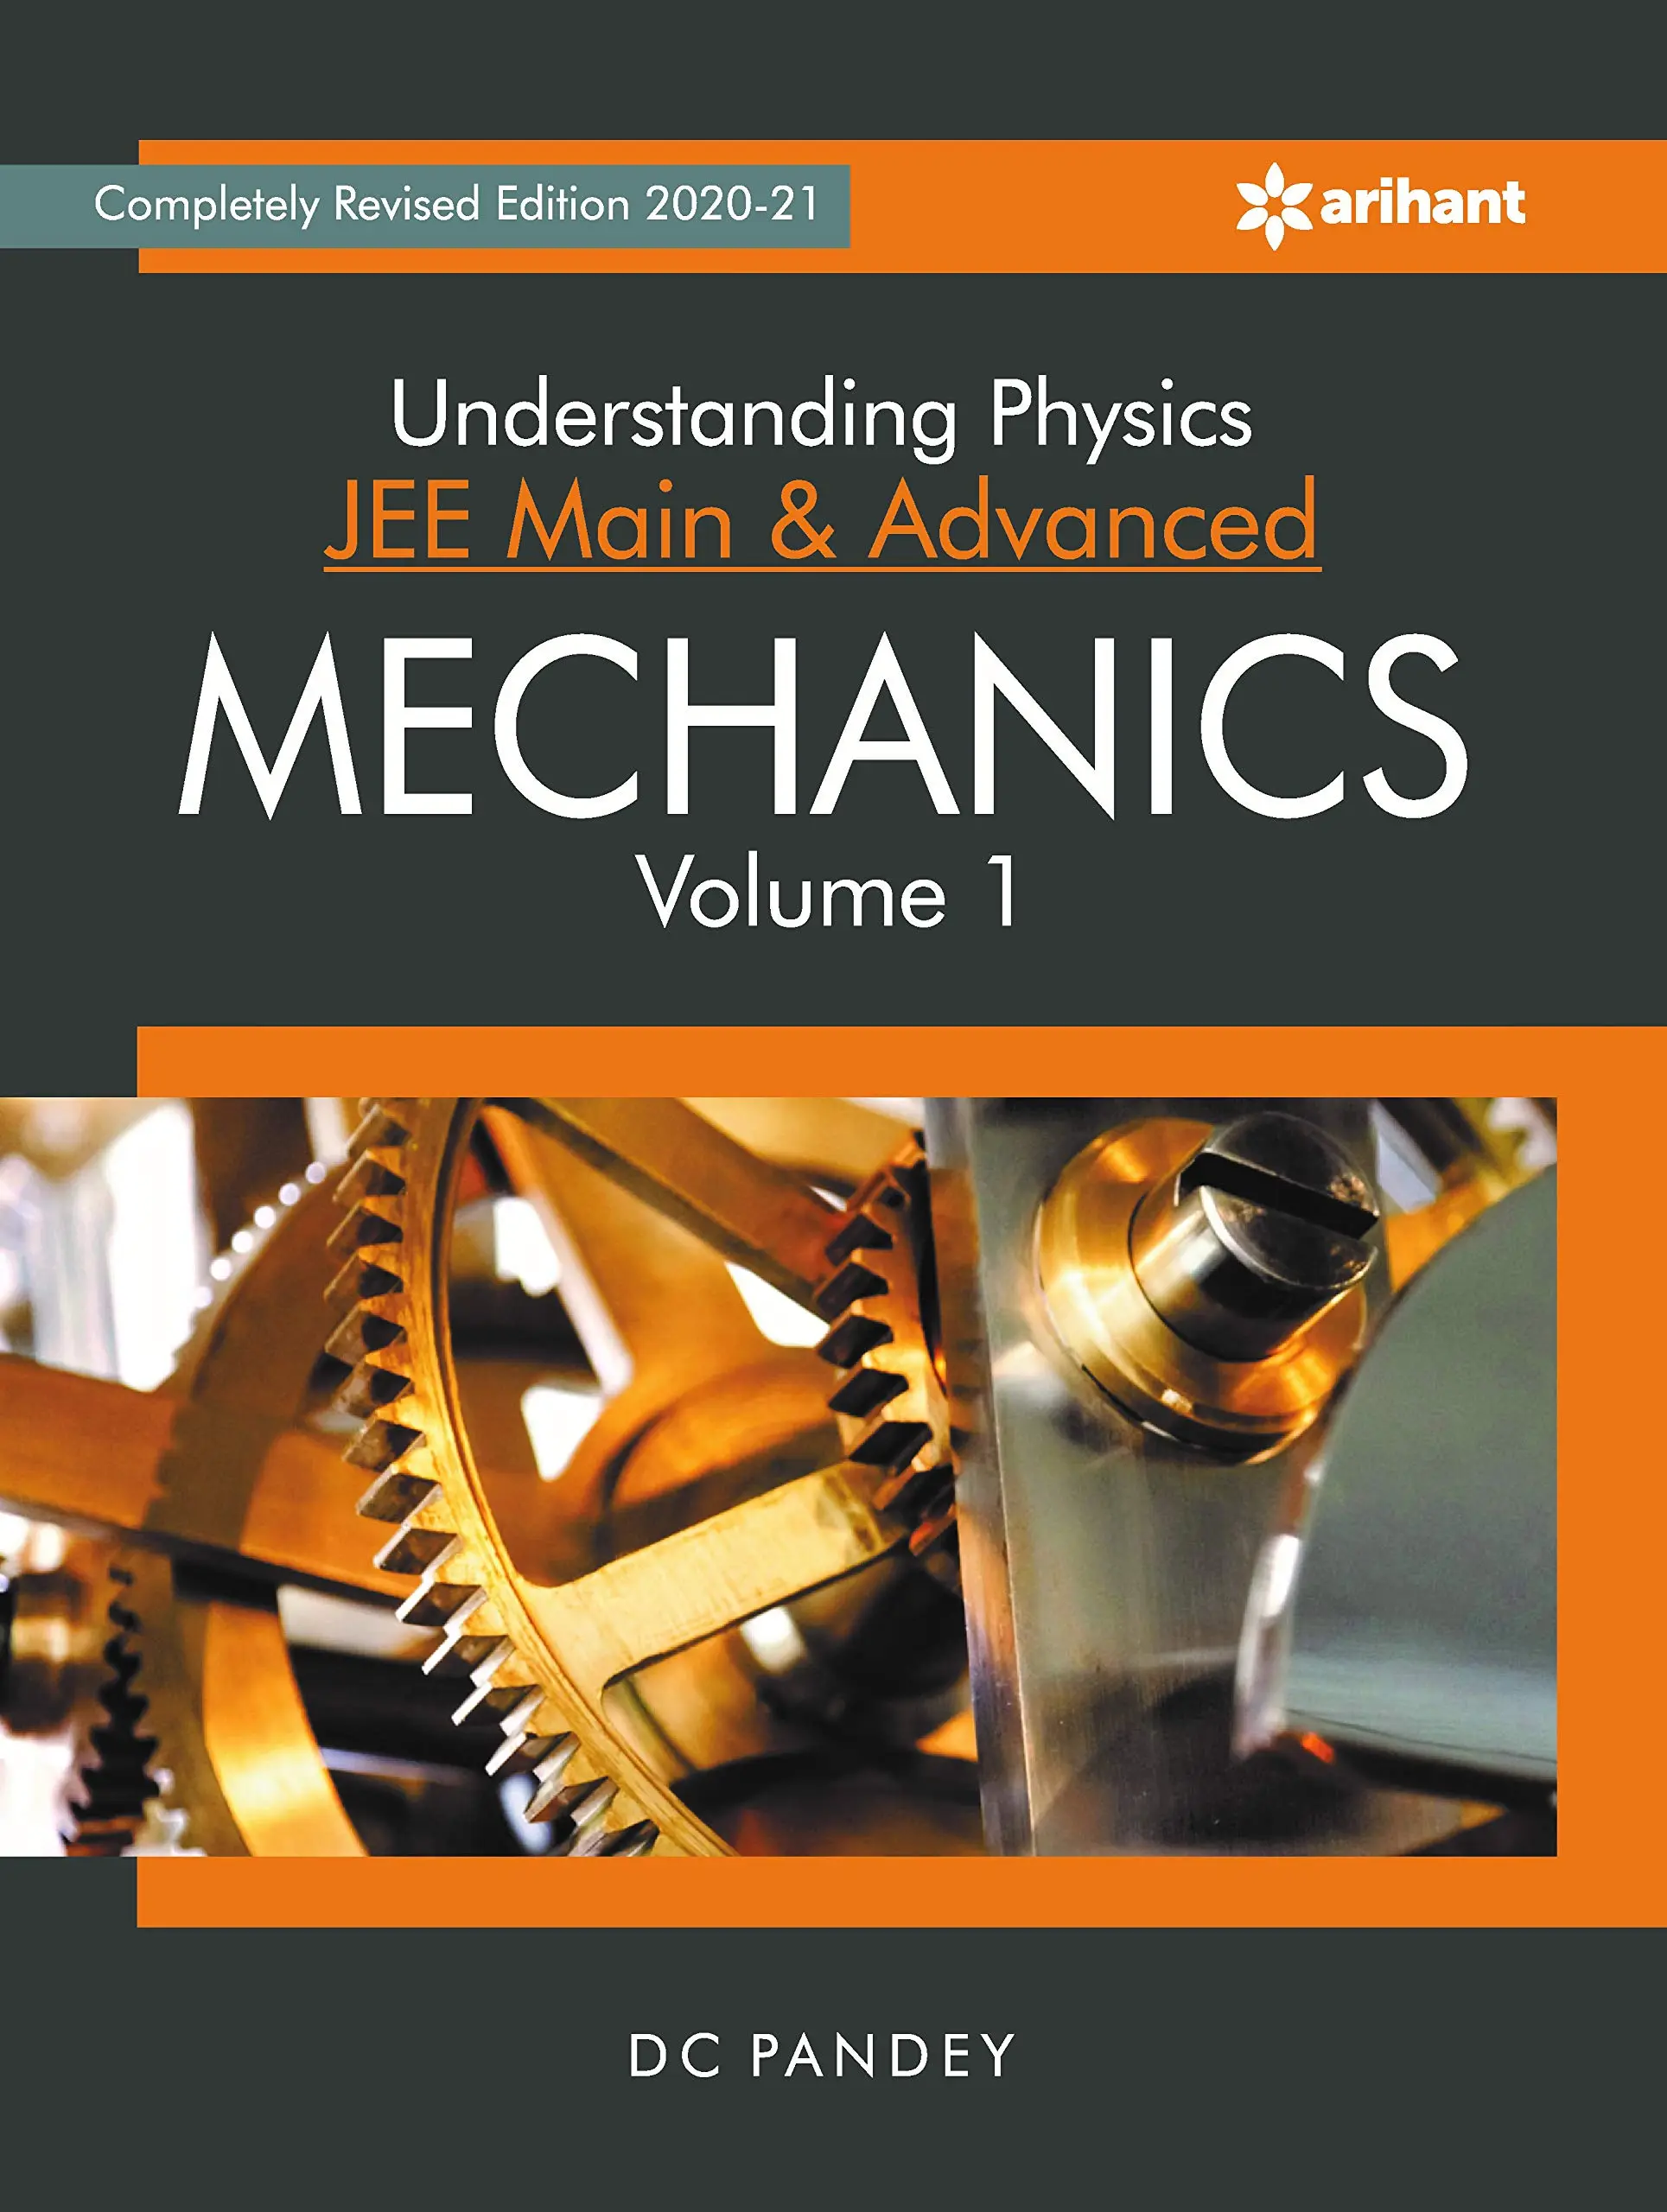 DC Pandey Physics Book